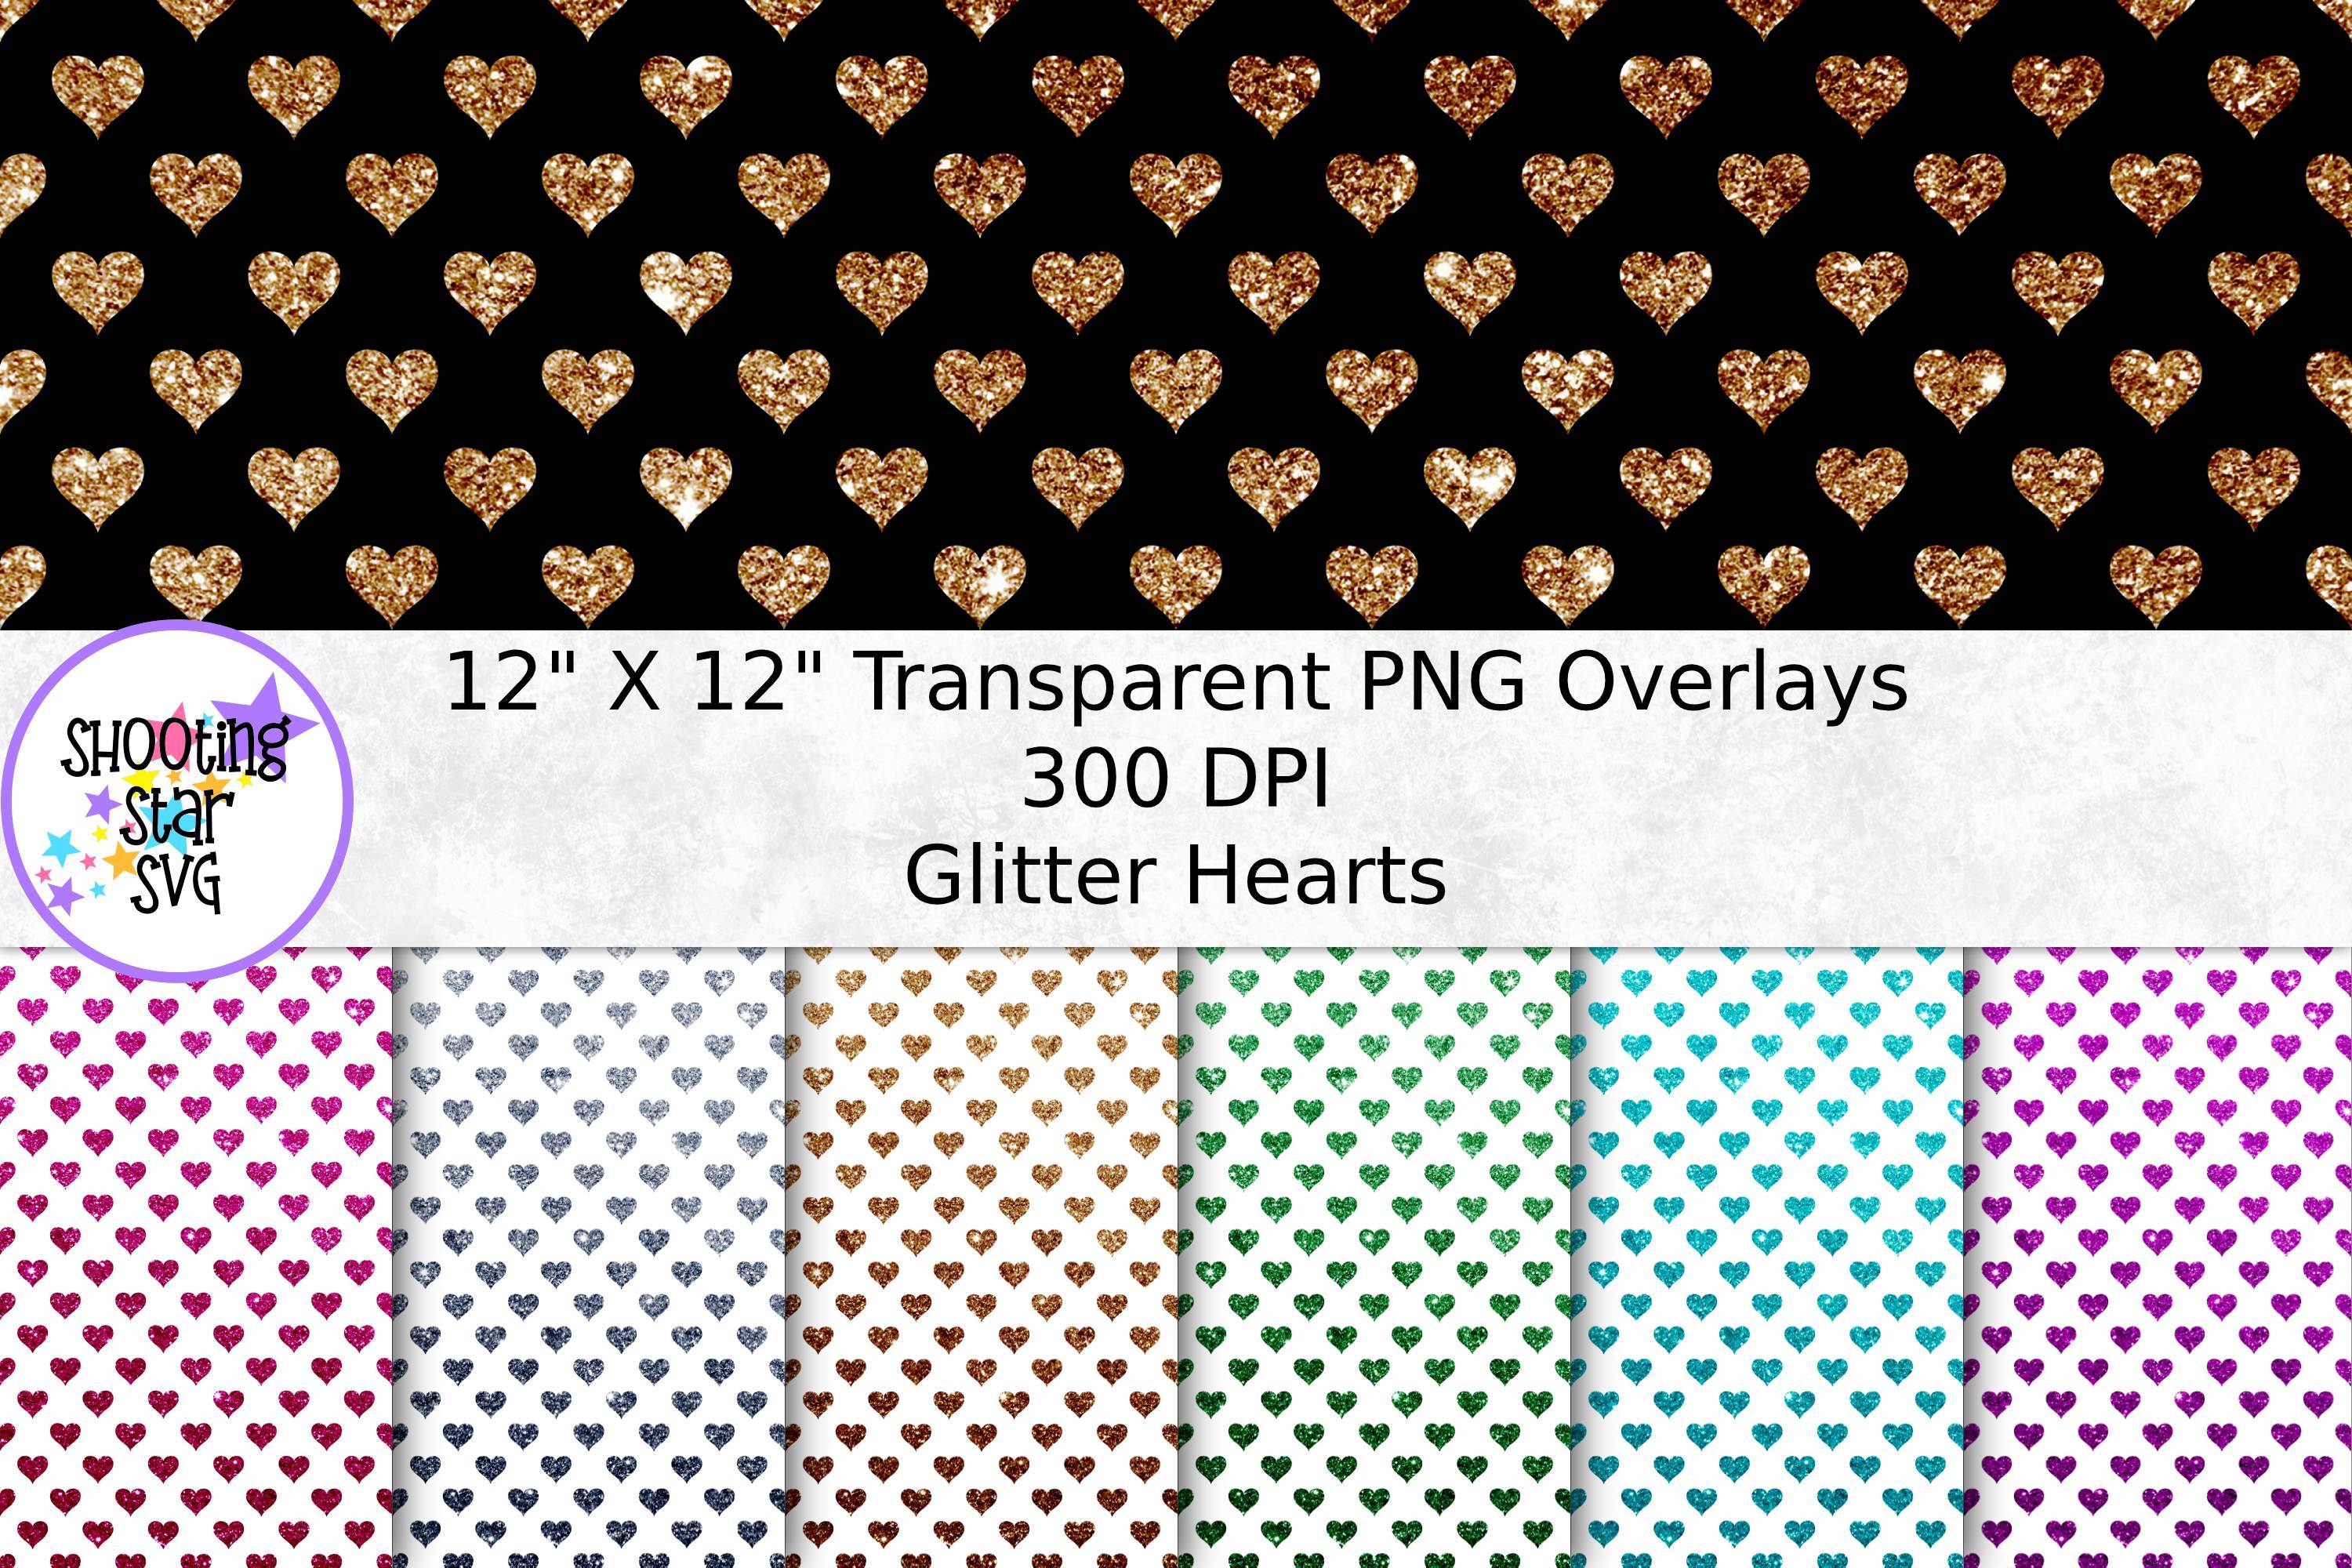 Glitter Hearts Transparent Paper Overlay - Seamless